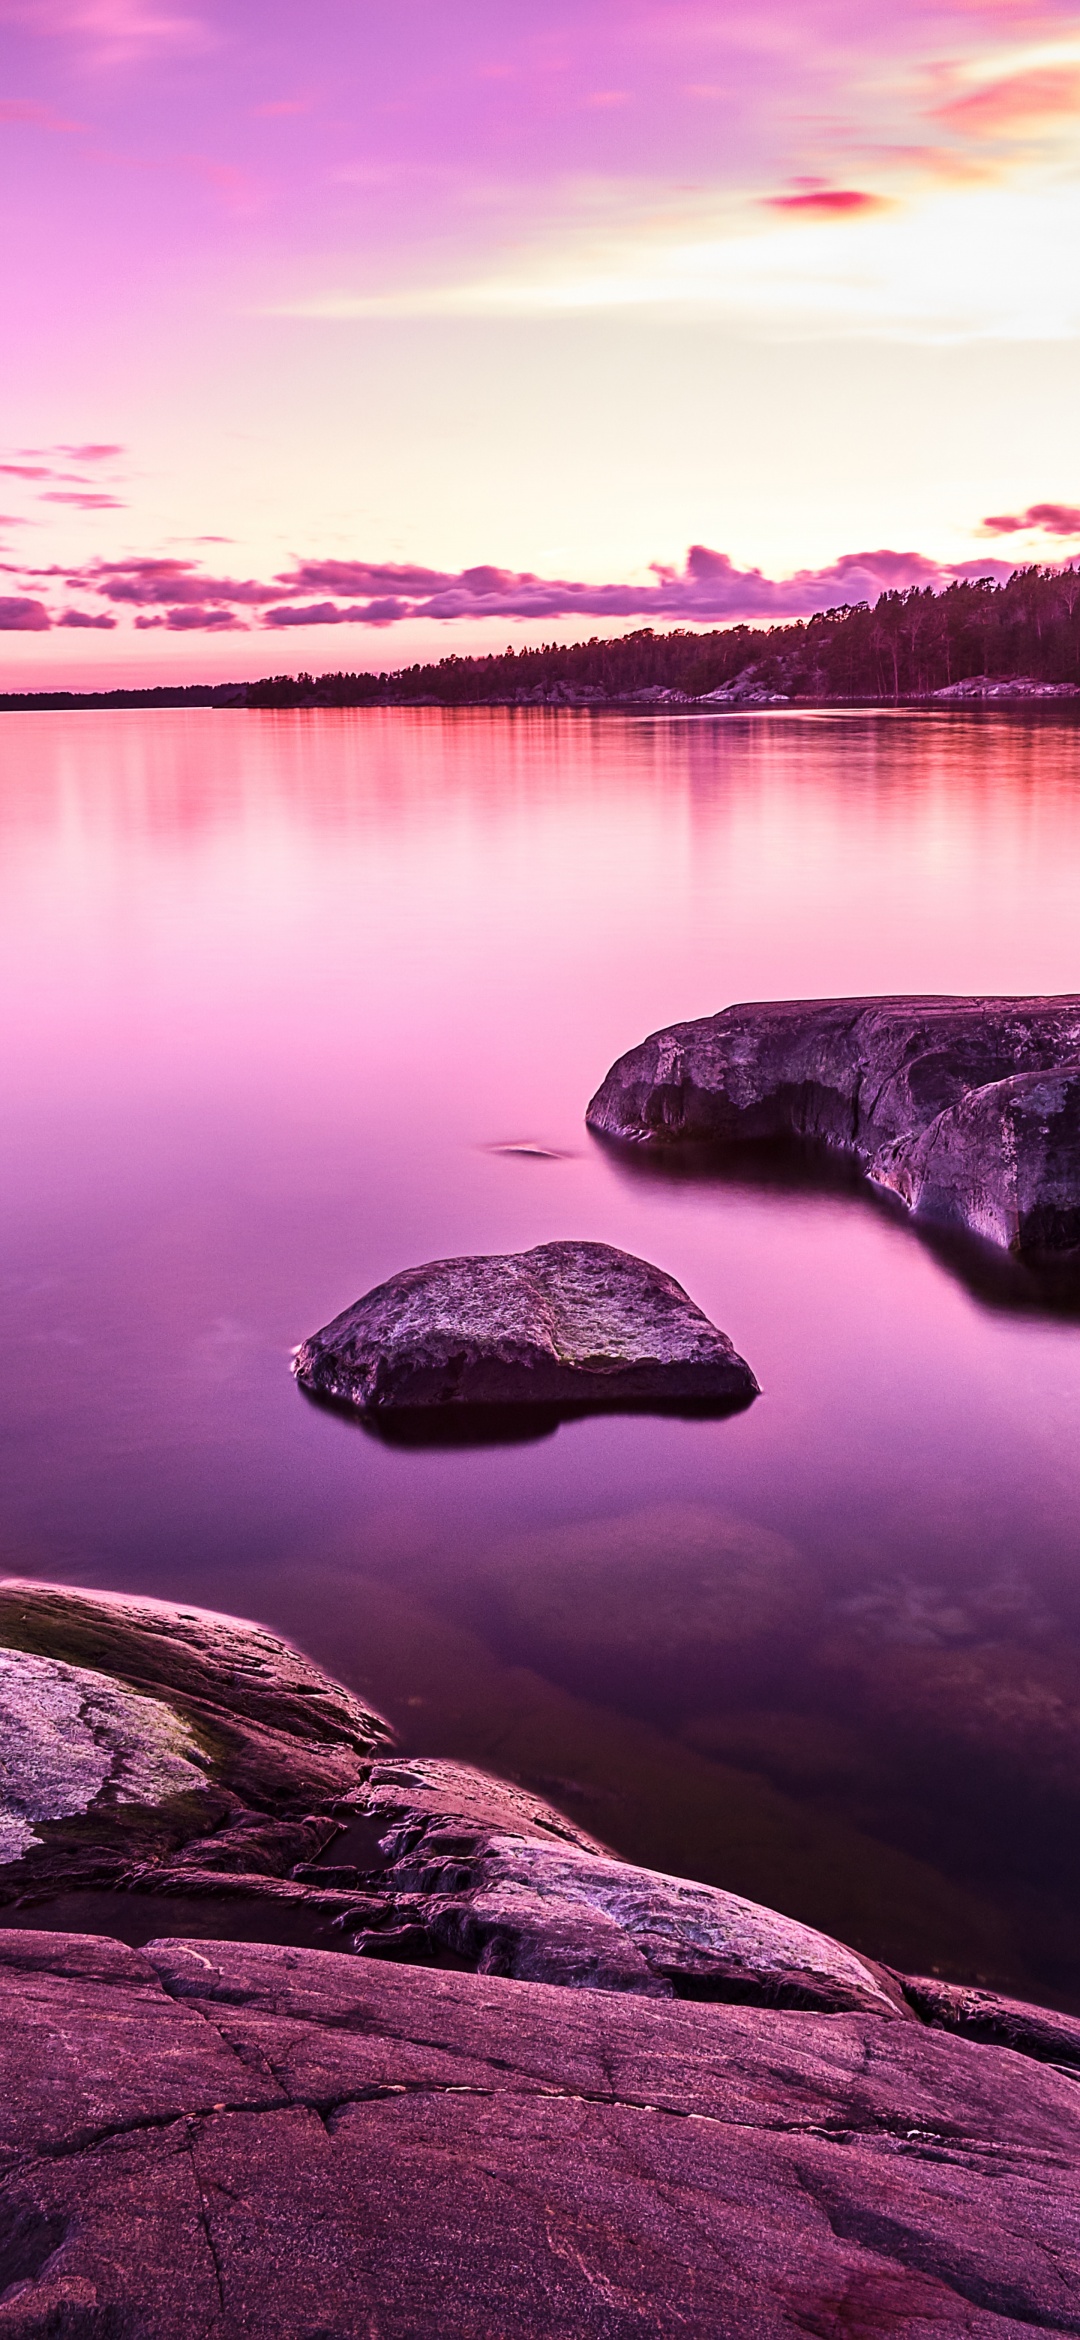 Sunset Wallpaper 4K, Lake, Purple, Pink sky, Scenery, Body of Water